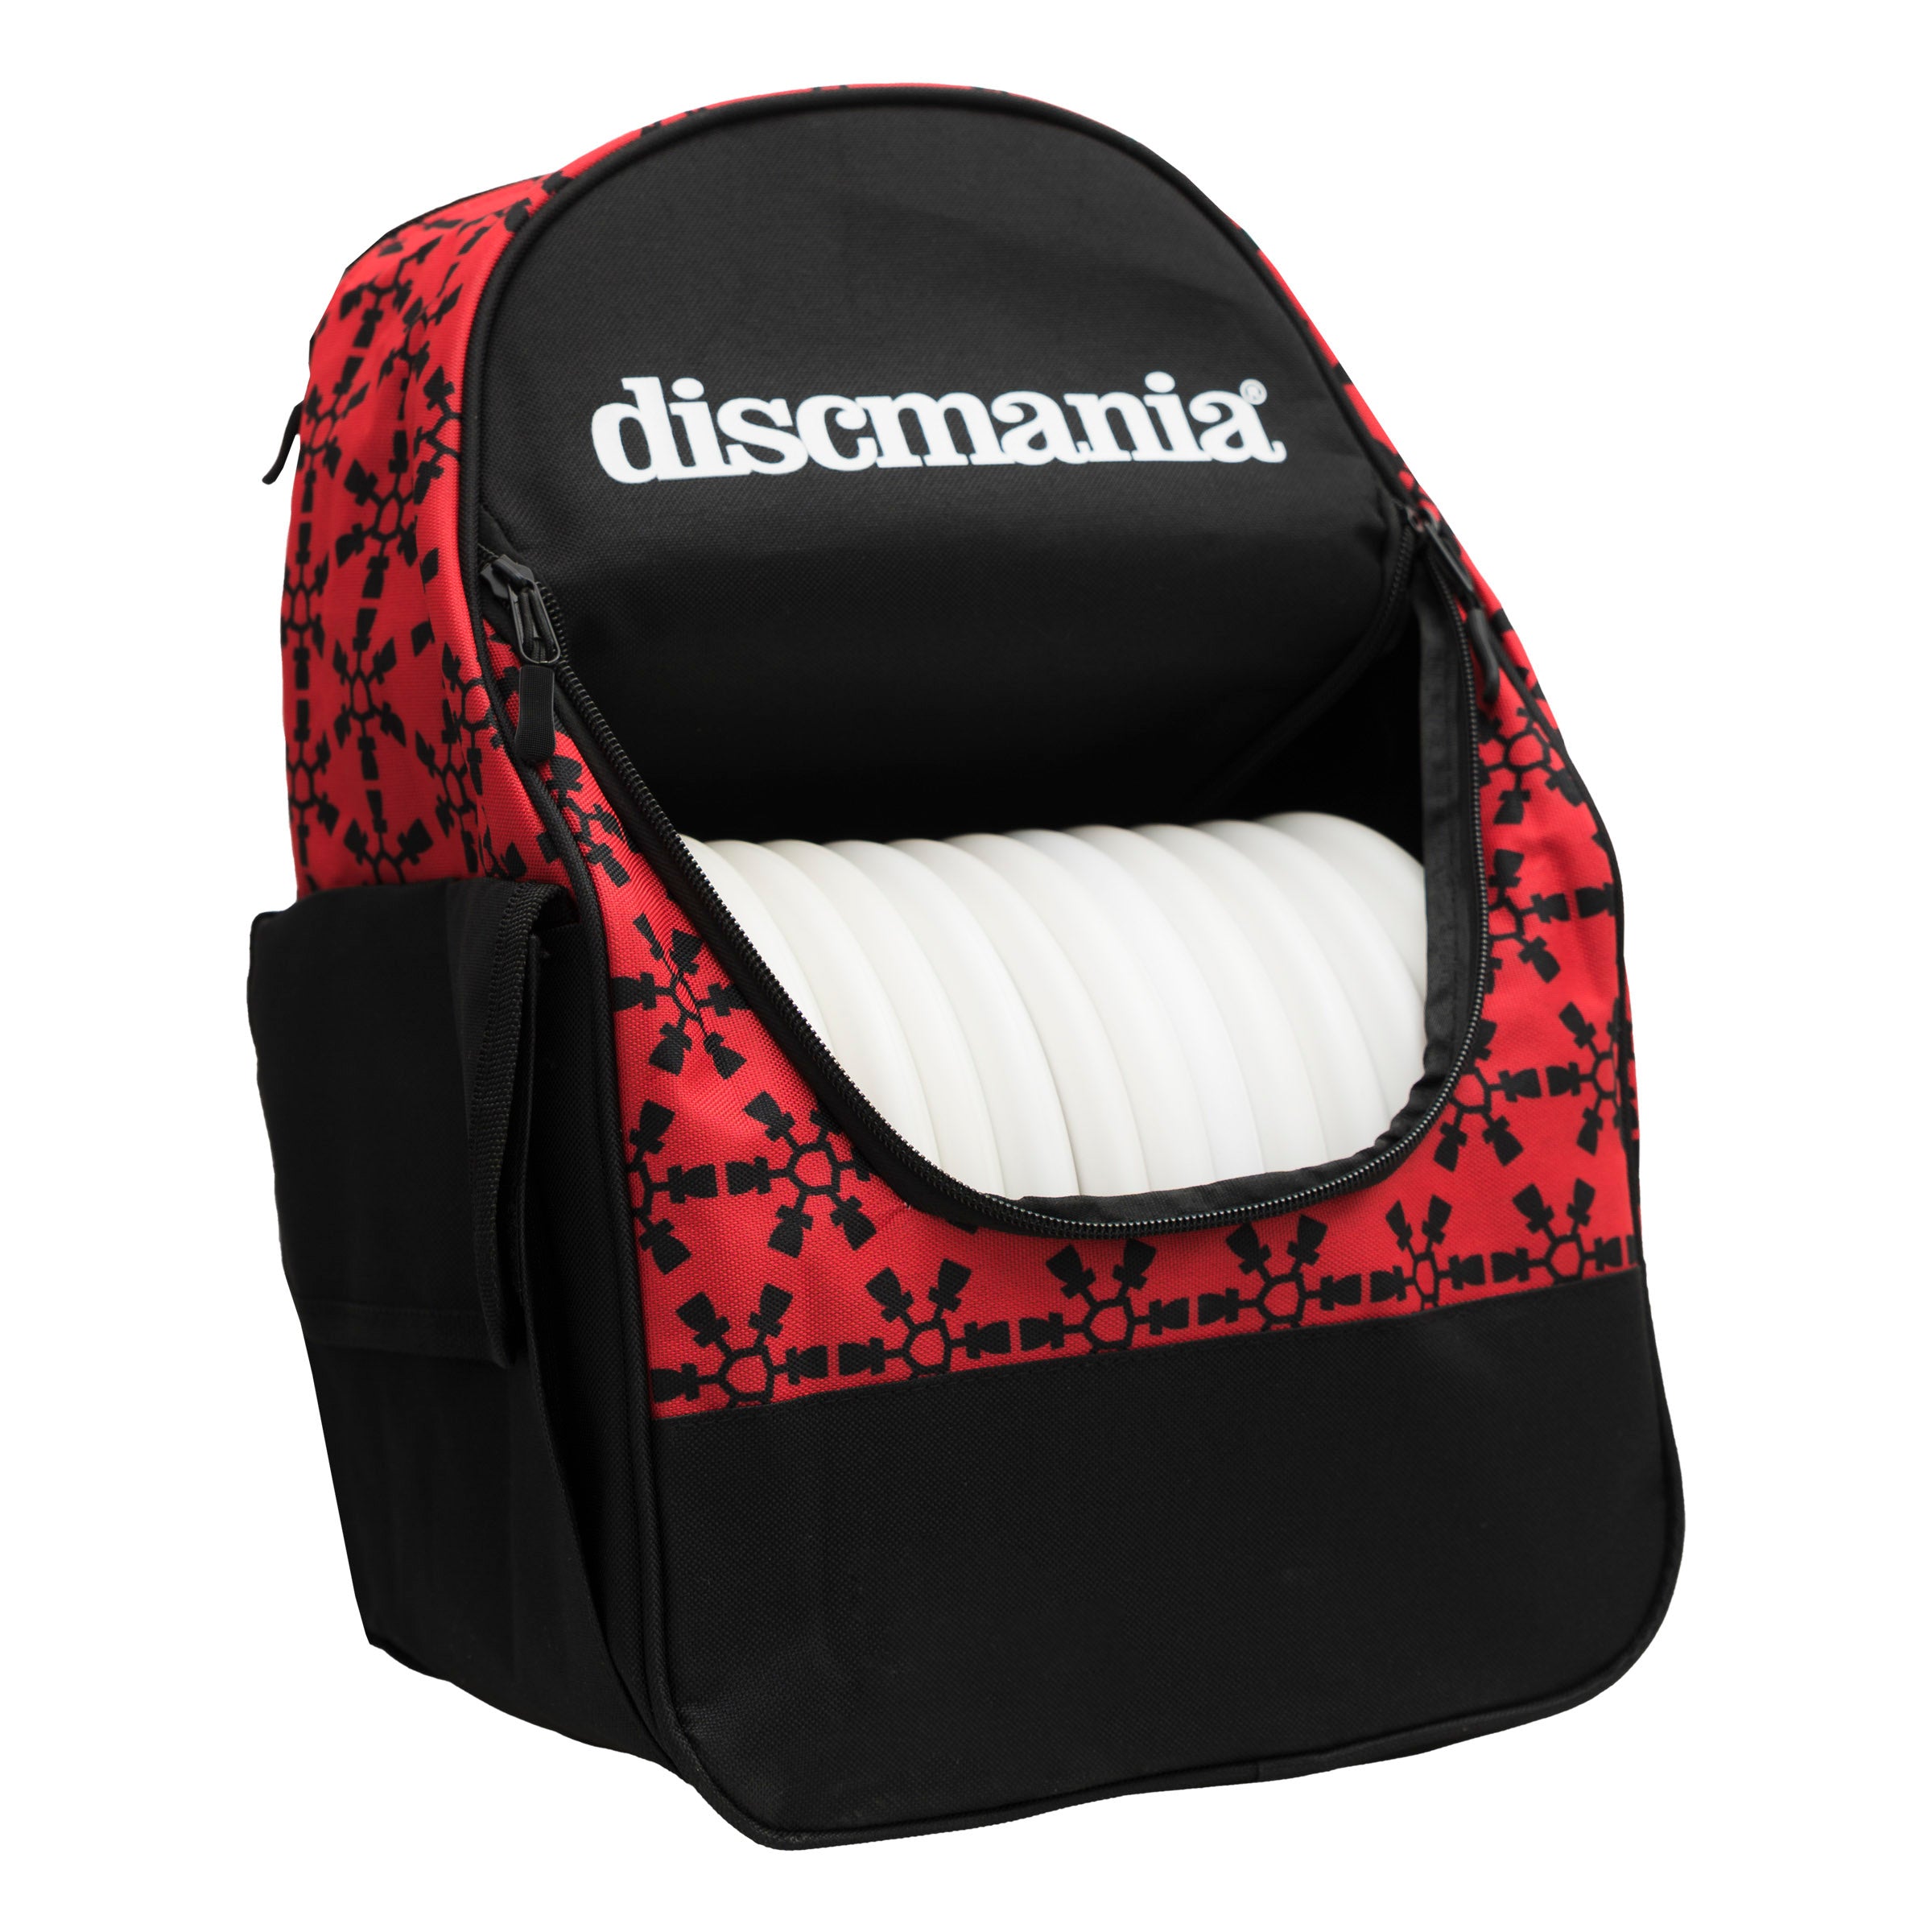 Discmania Go Backpack Bag